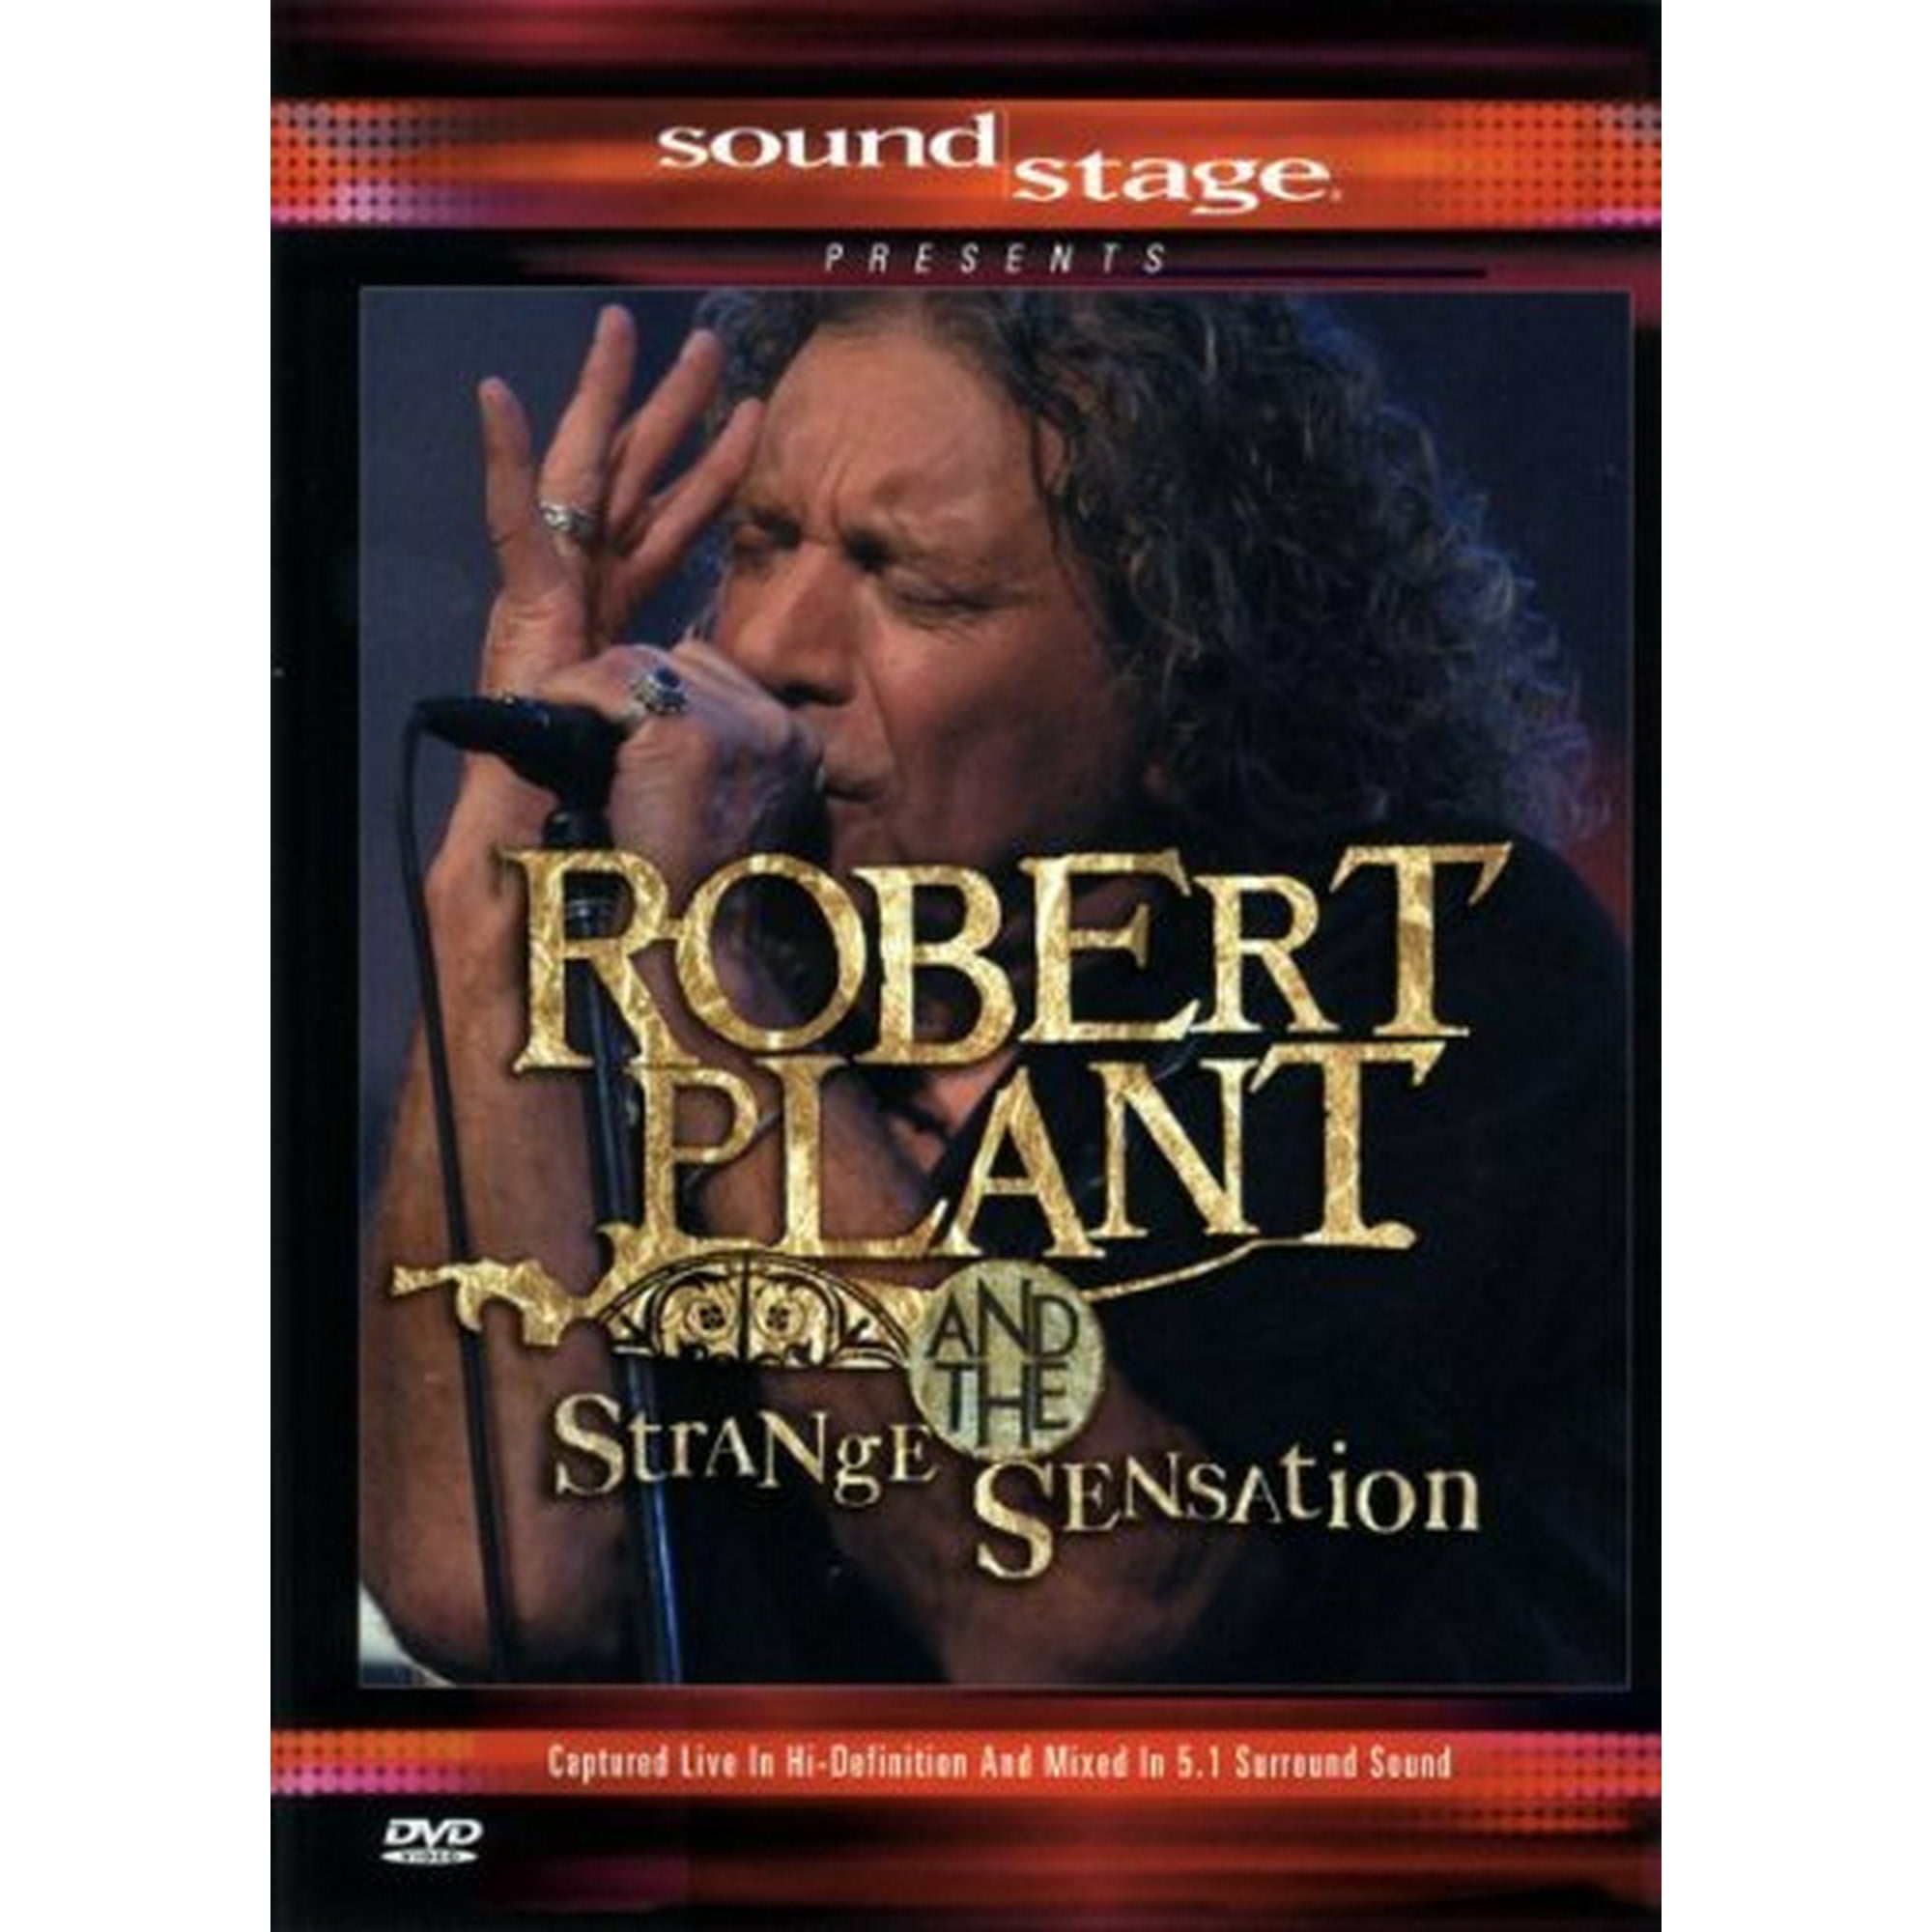 Robert Plant - Robert Plant and the Strange Sensation: Soundstage